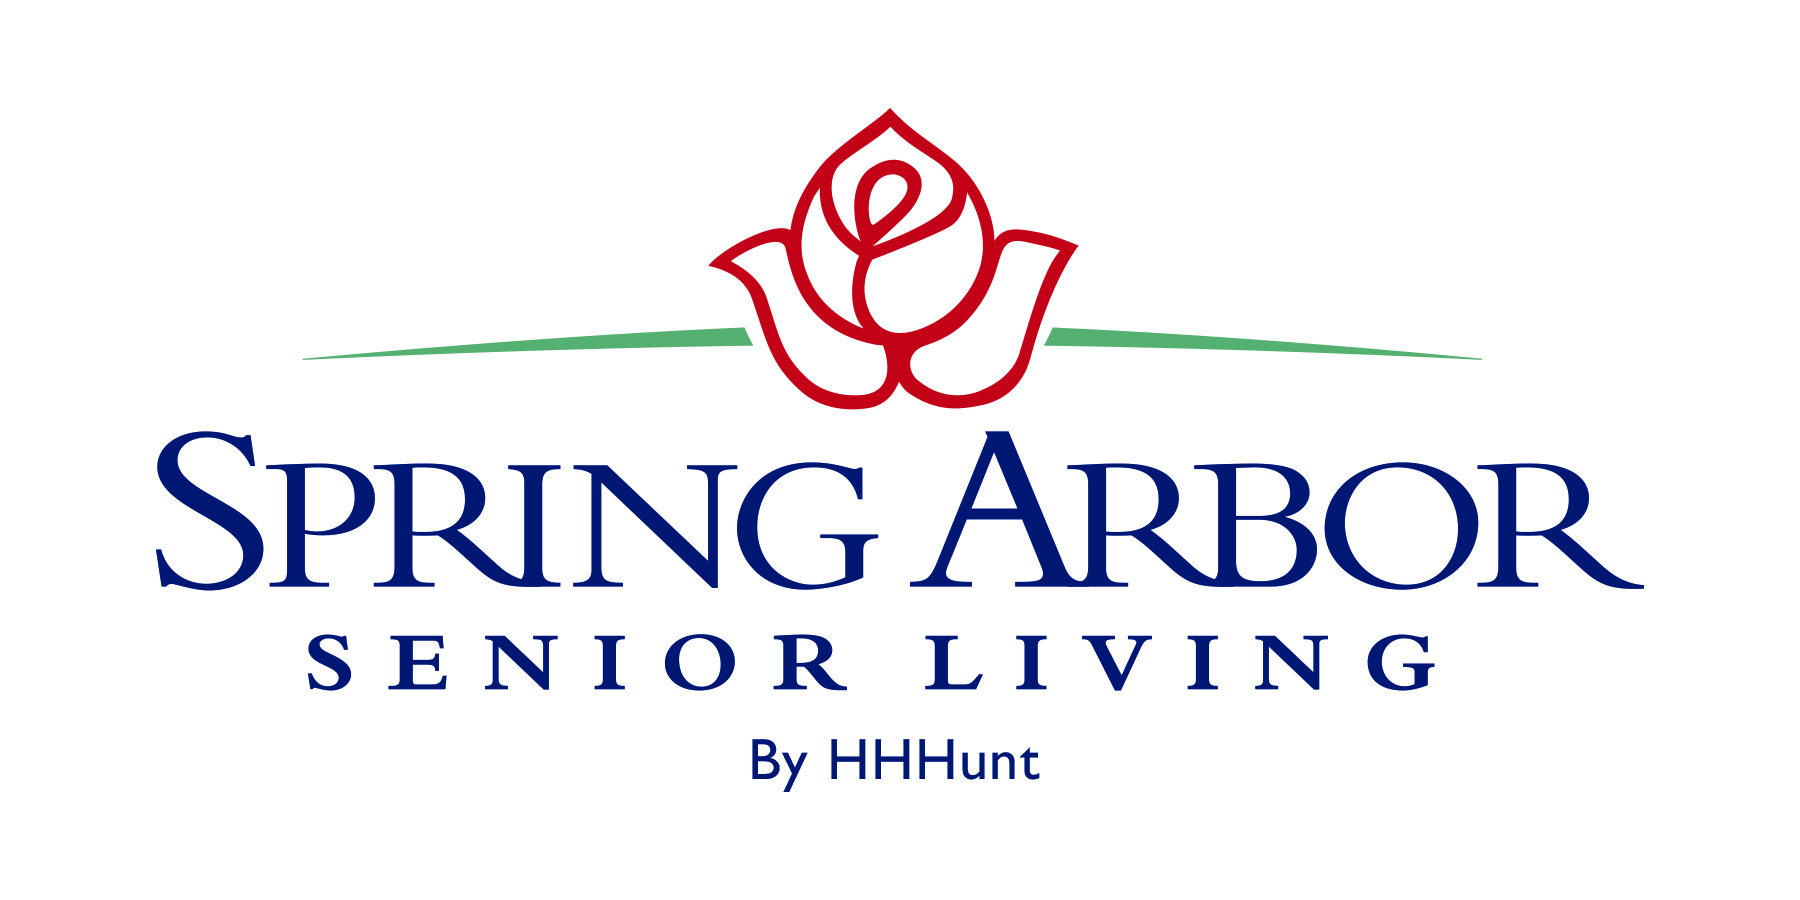 9.2. Spring Arbor Senior Living (Bronce)